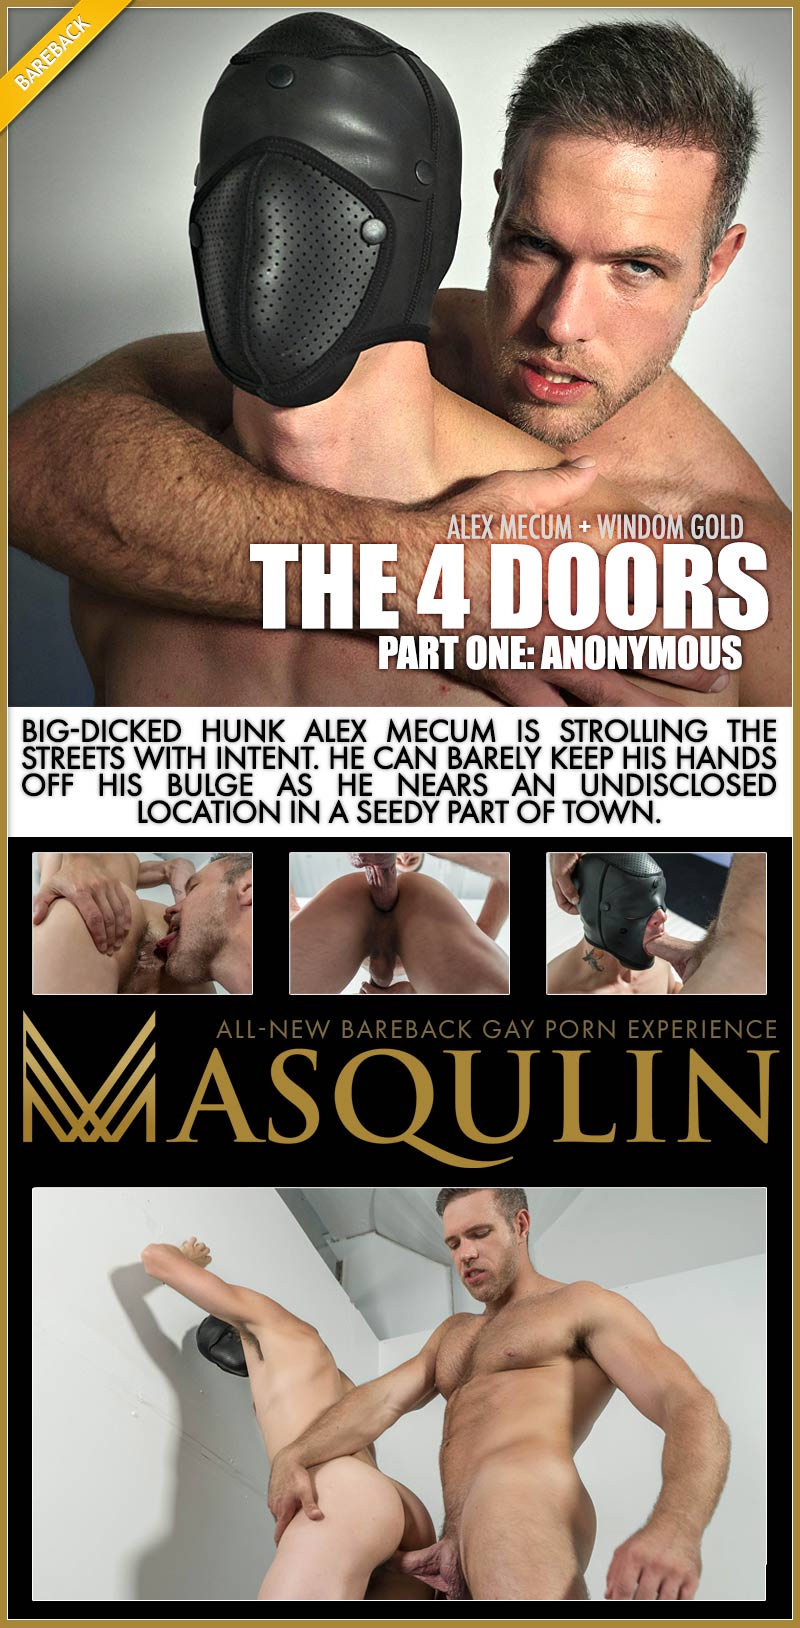 The 4 Doors, Part One: Anonymous (Alex Mecum Fucks Windom Gold) at MASQULIN